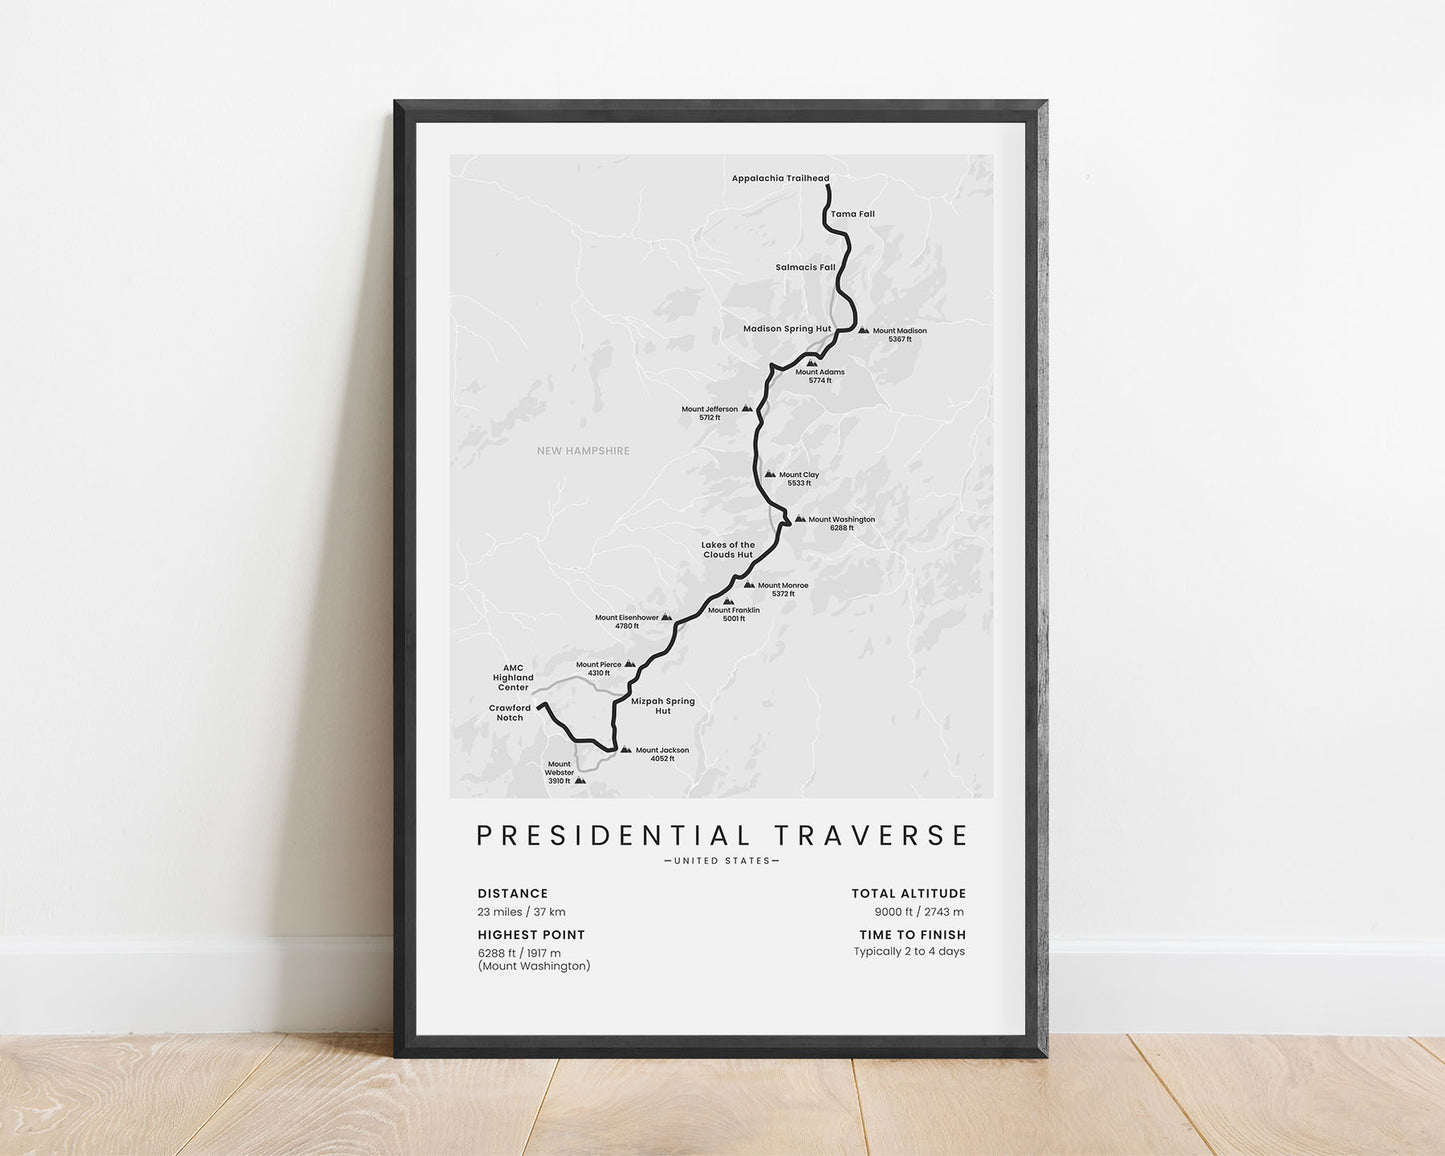 Presidental Traverse (White Mountains) Route Poster with white background